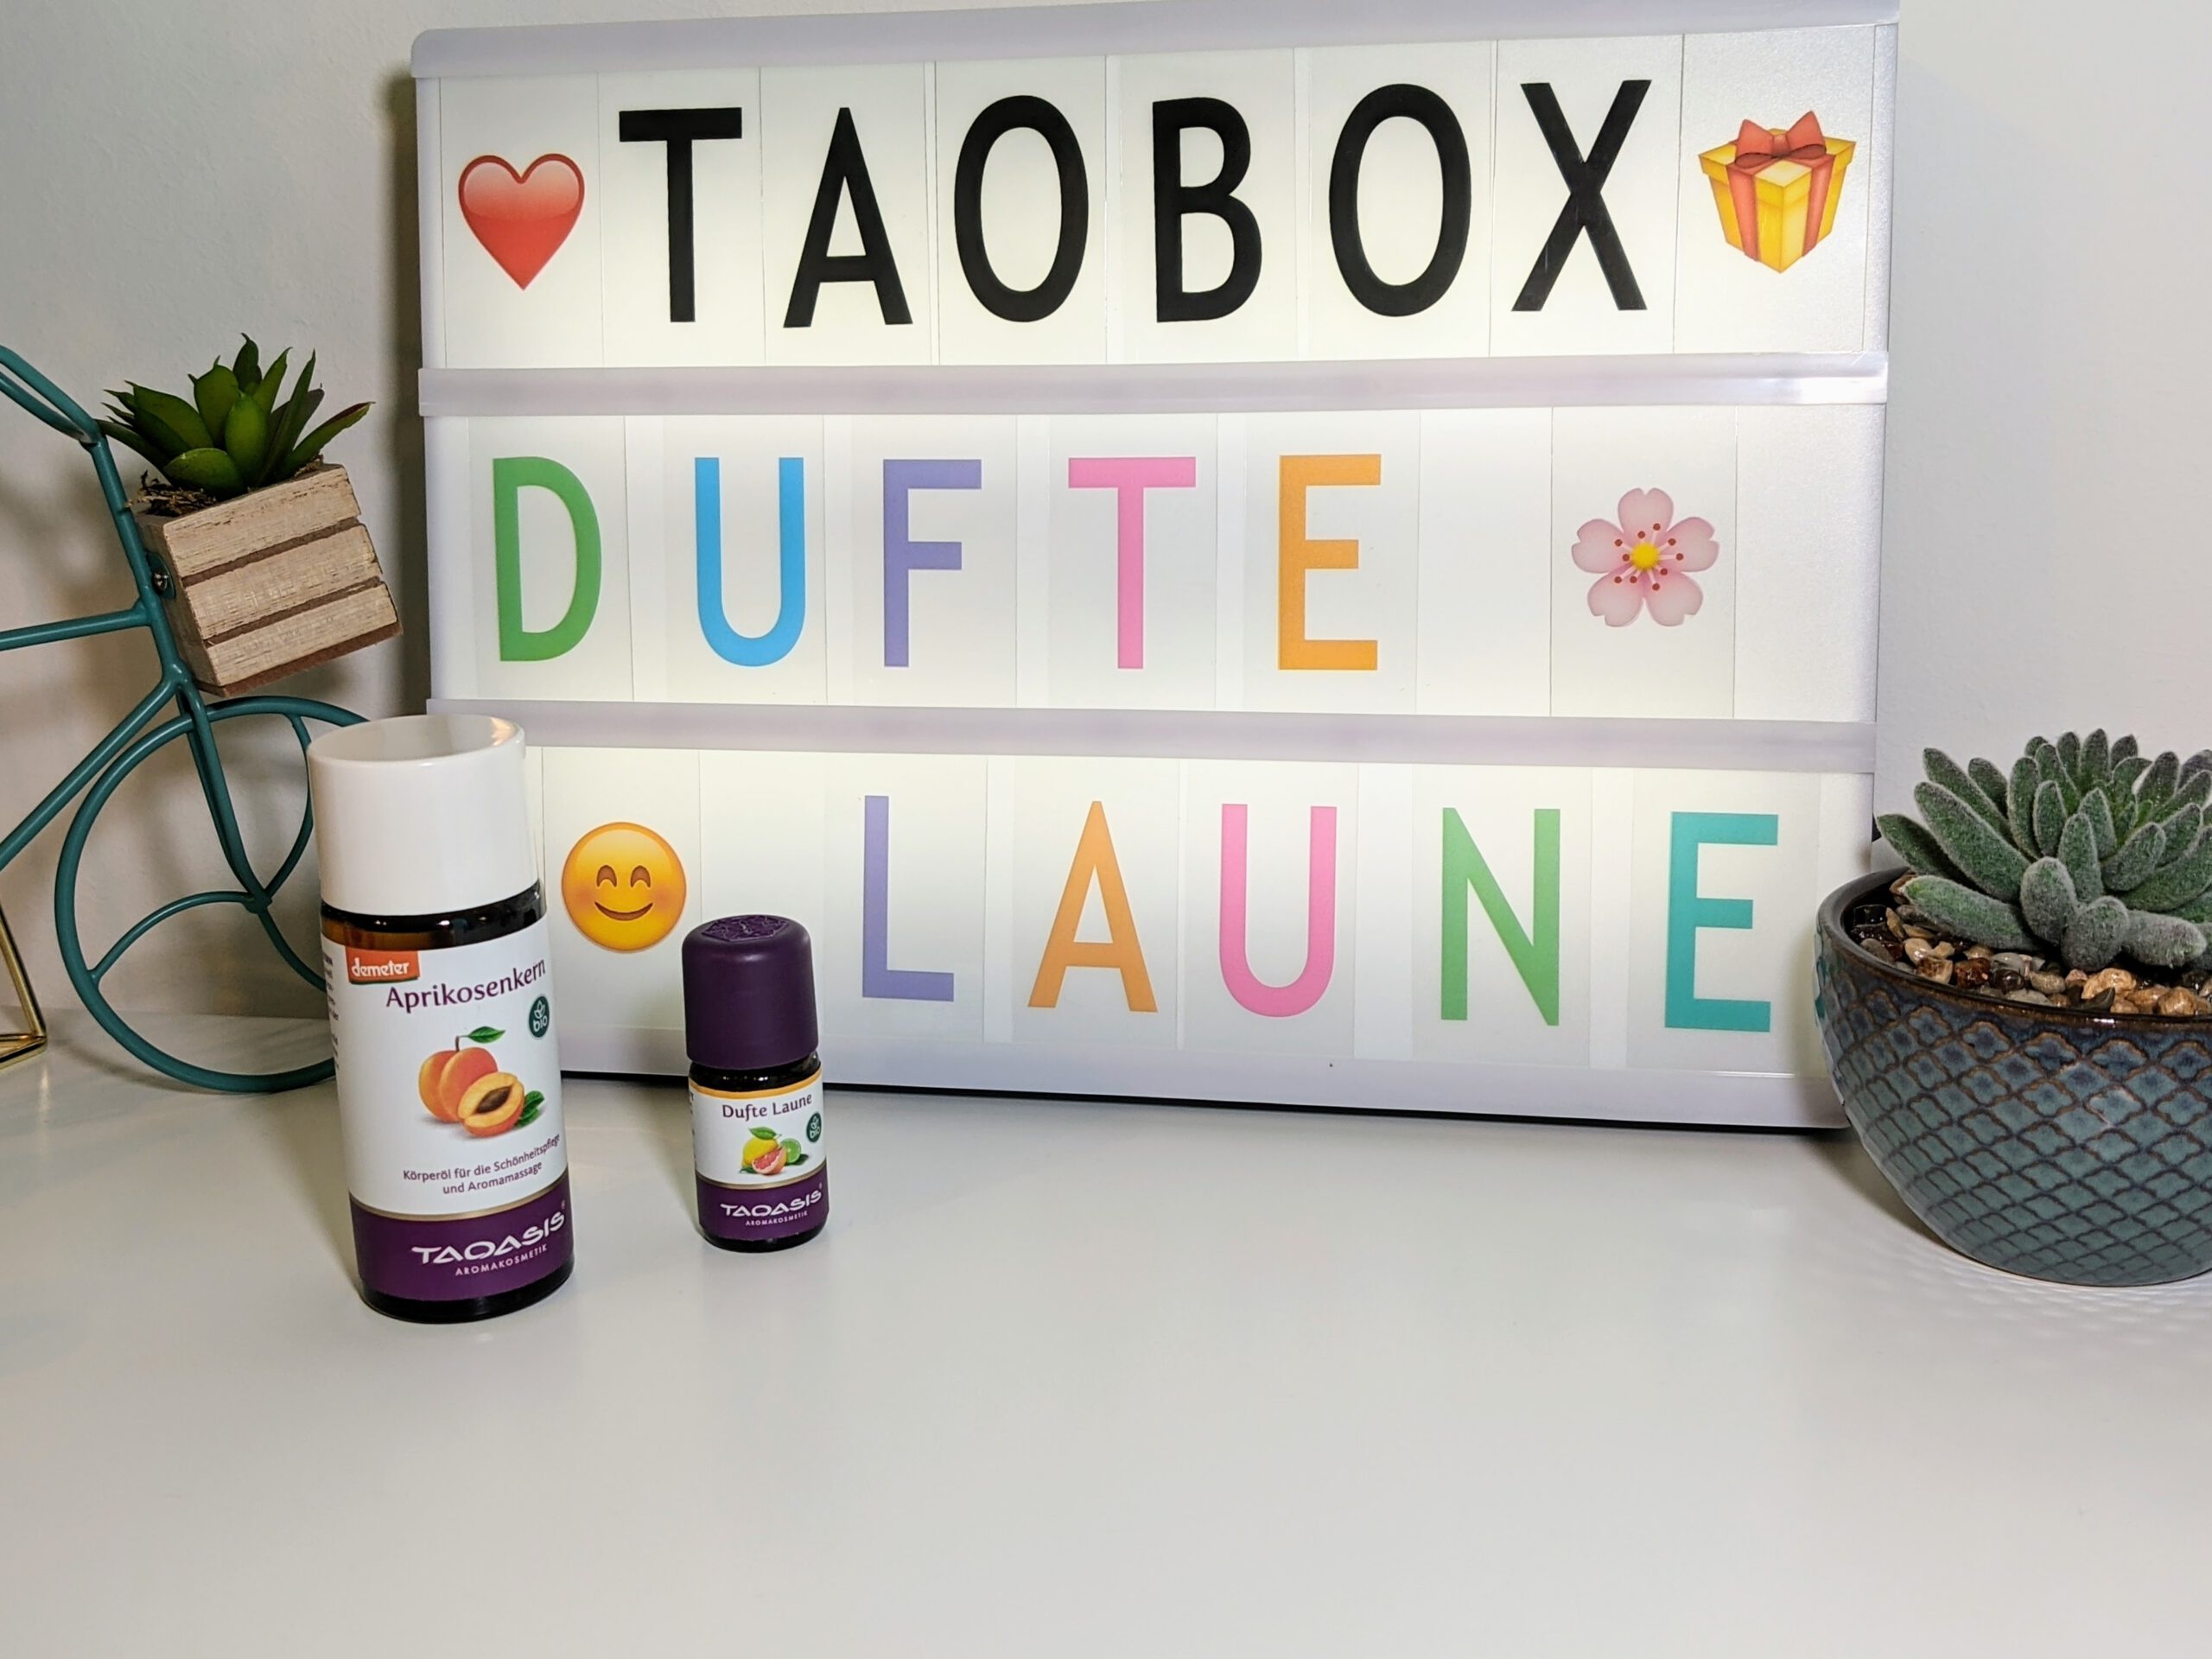 TaoBox – Dufte Laune – Aprikosenkern Körperöl und Duftmischung Dufte Laune